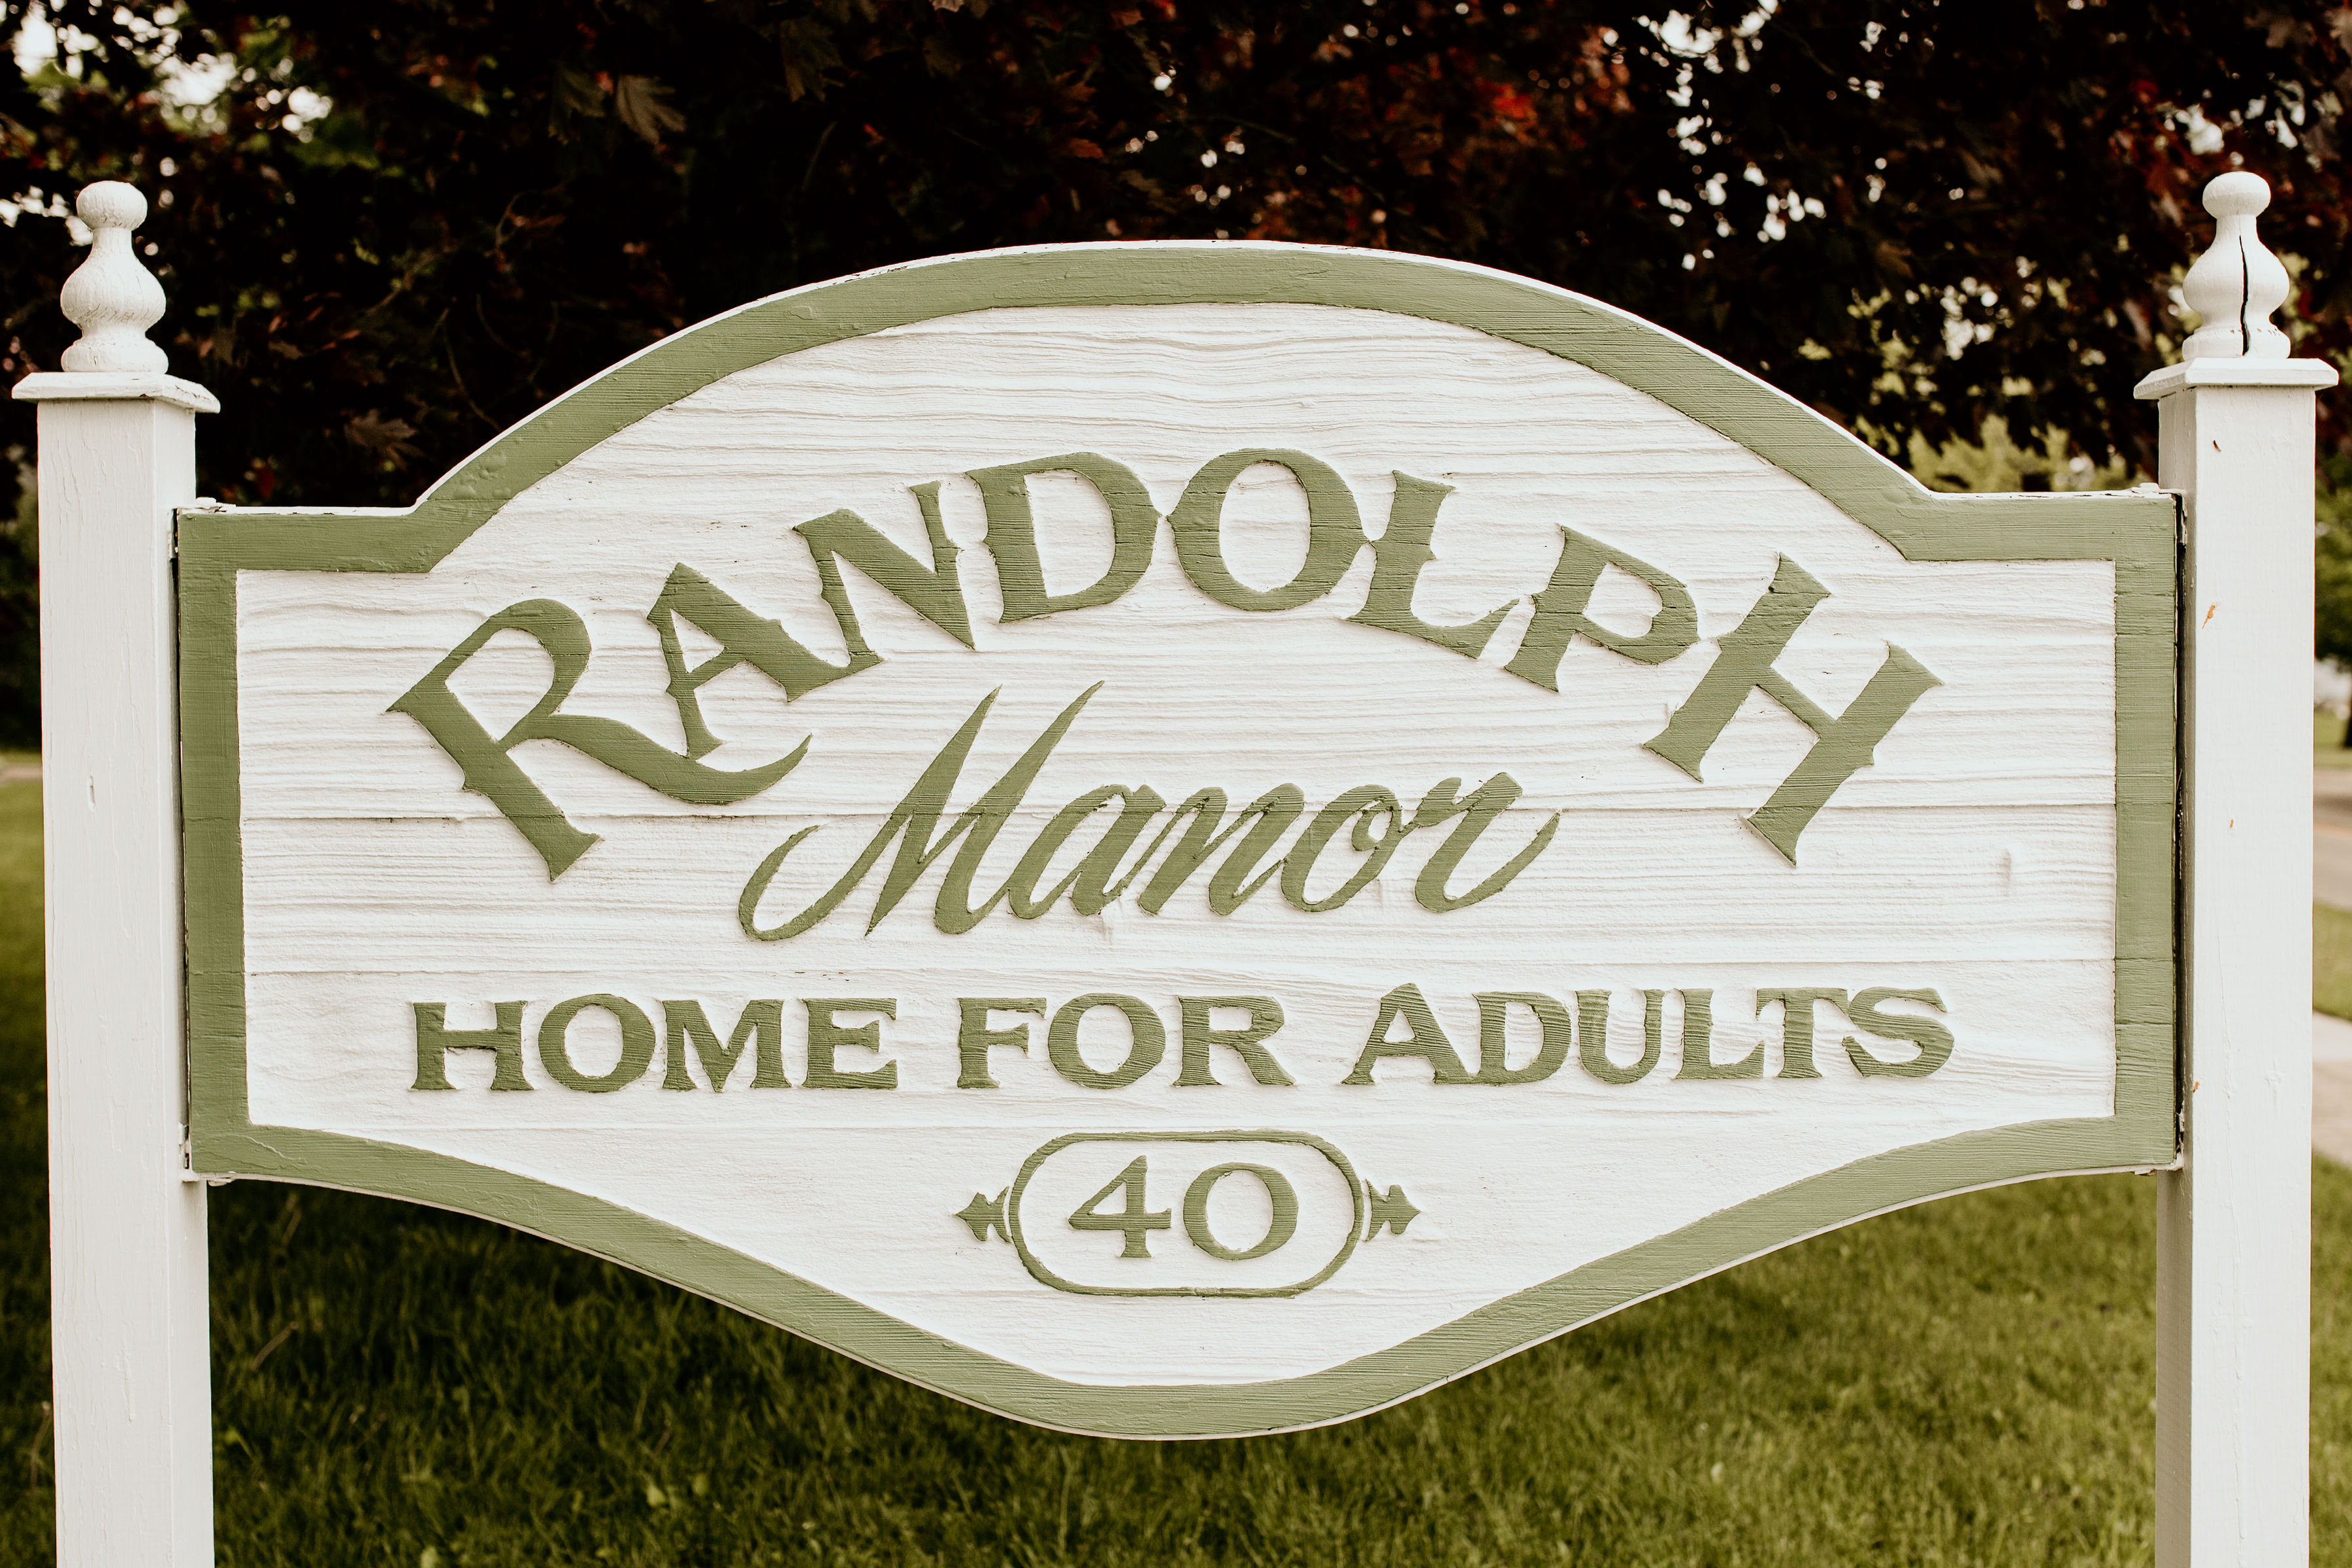 Randolph Manor image